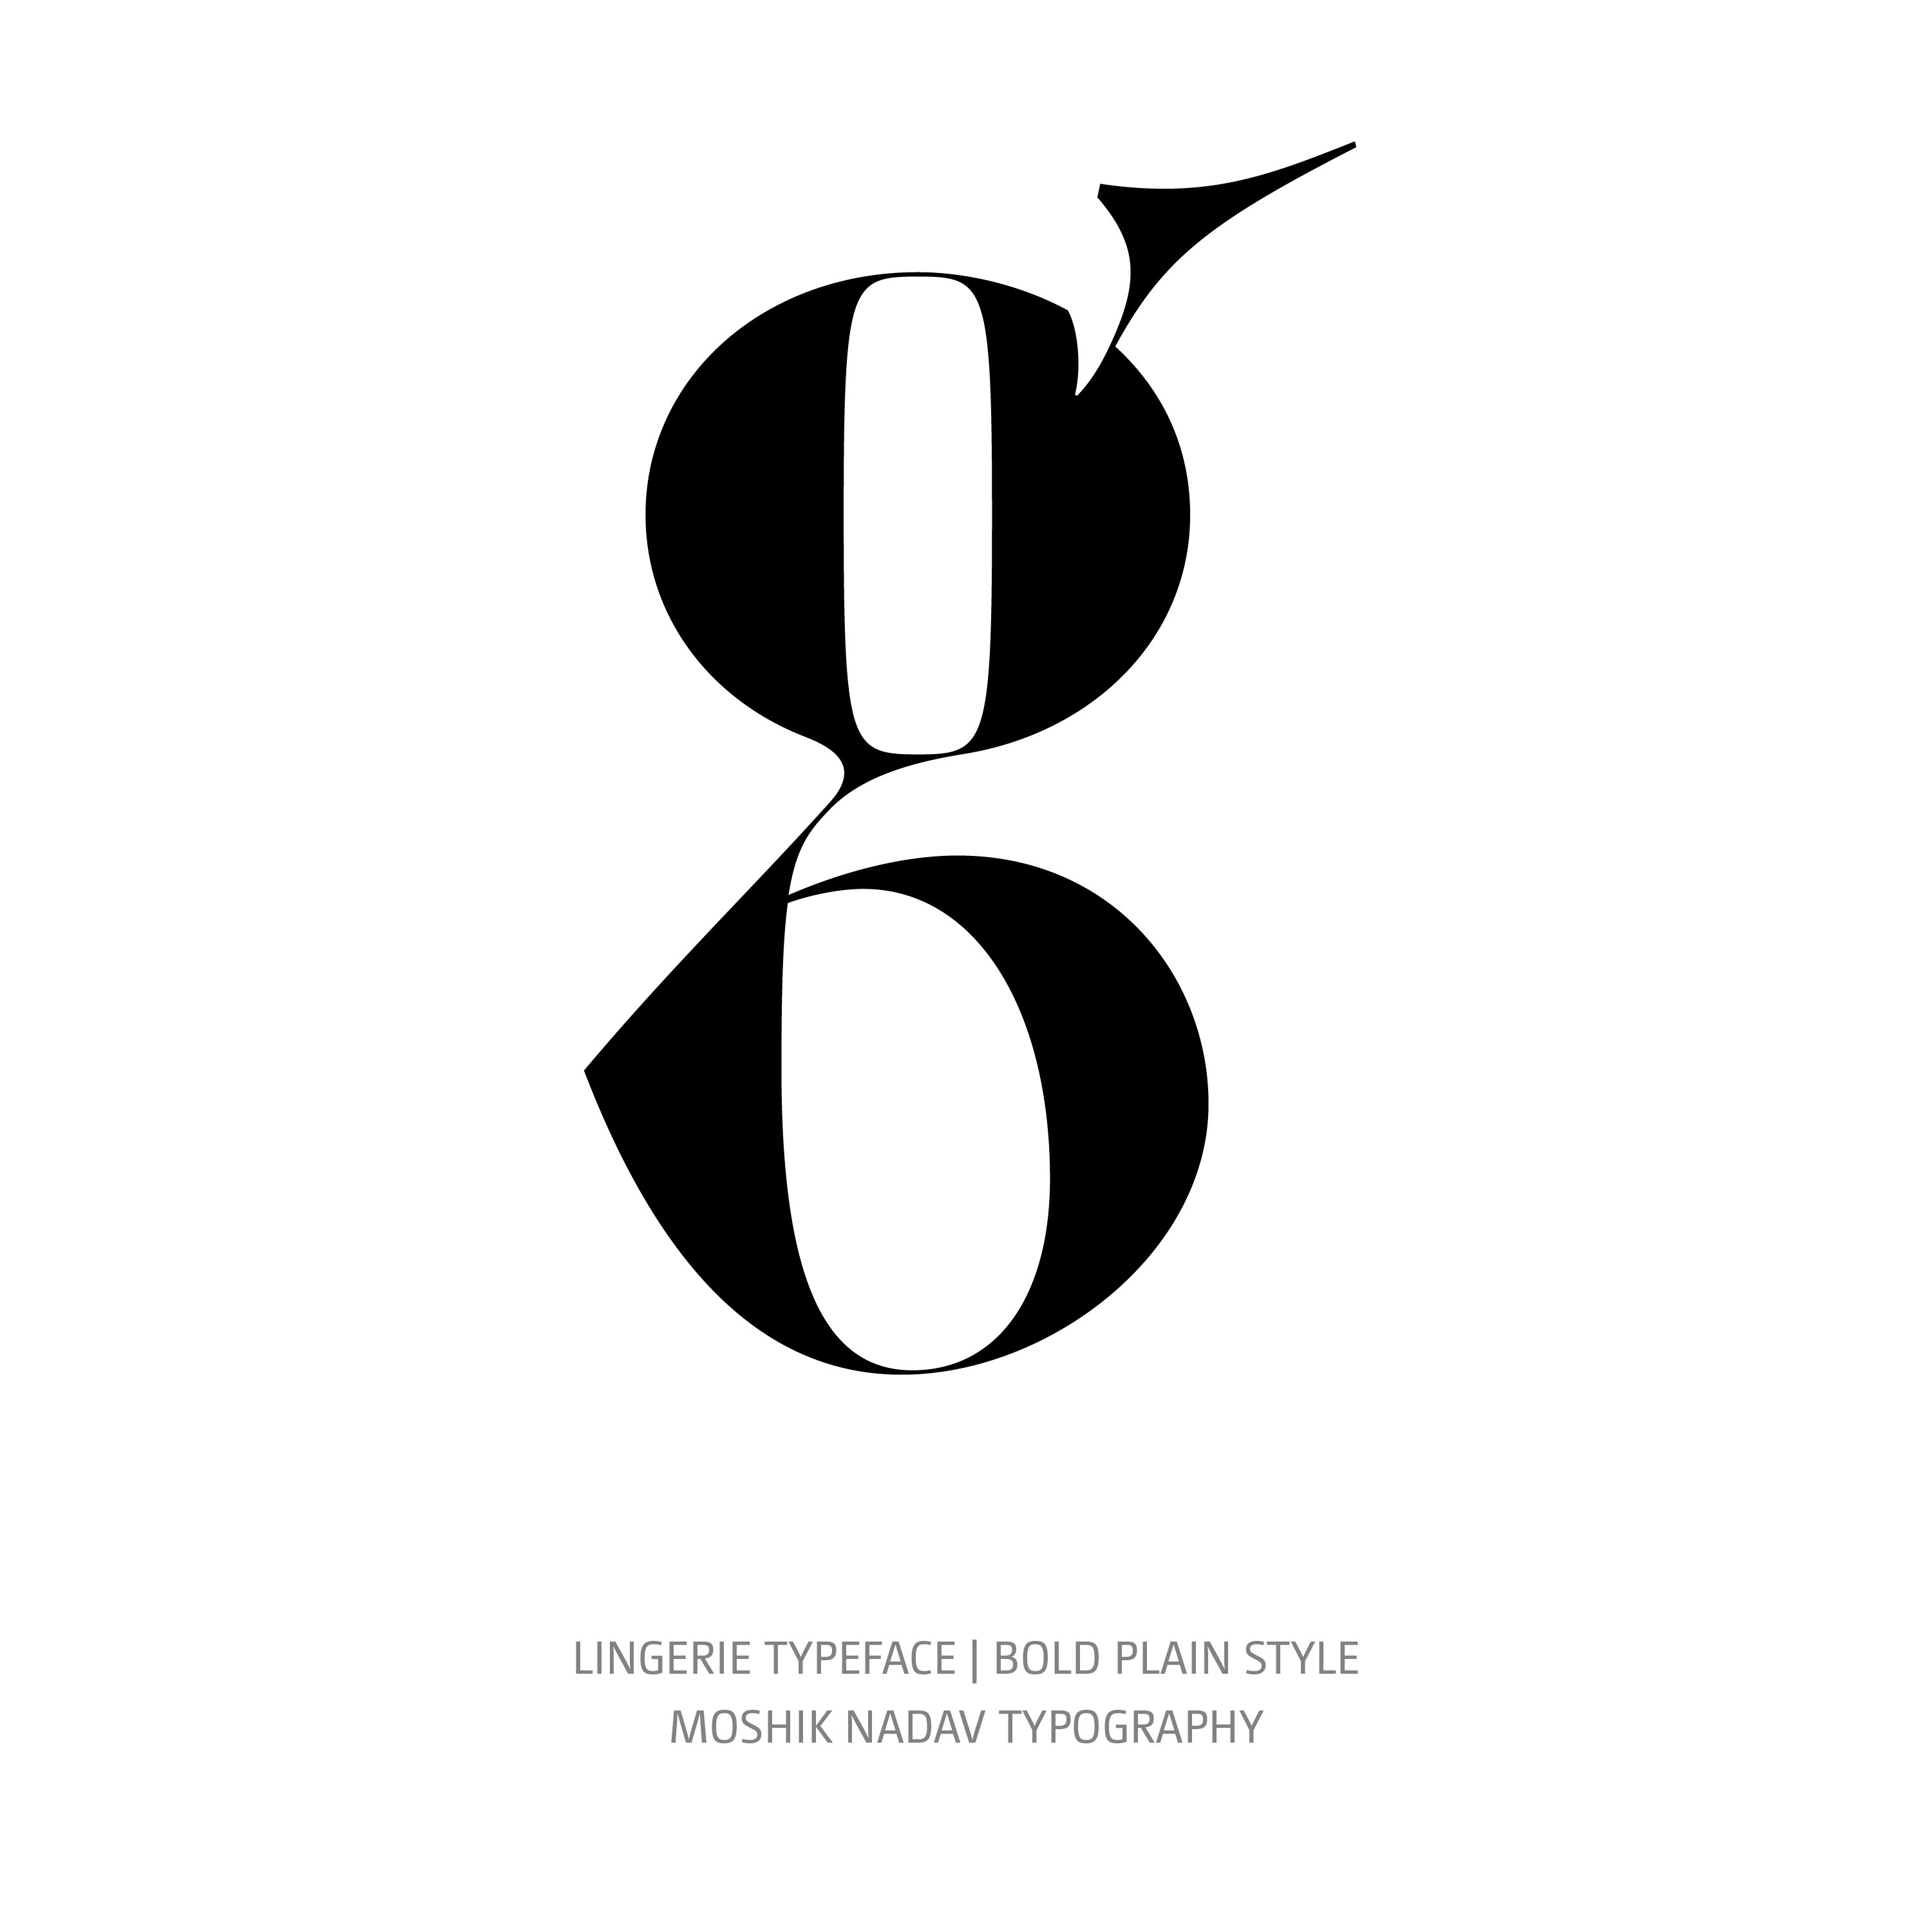 Lingerie Typeface Bold Plain g